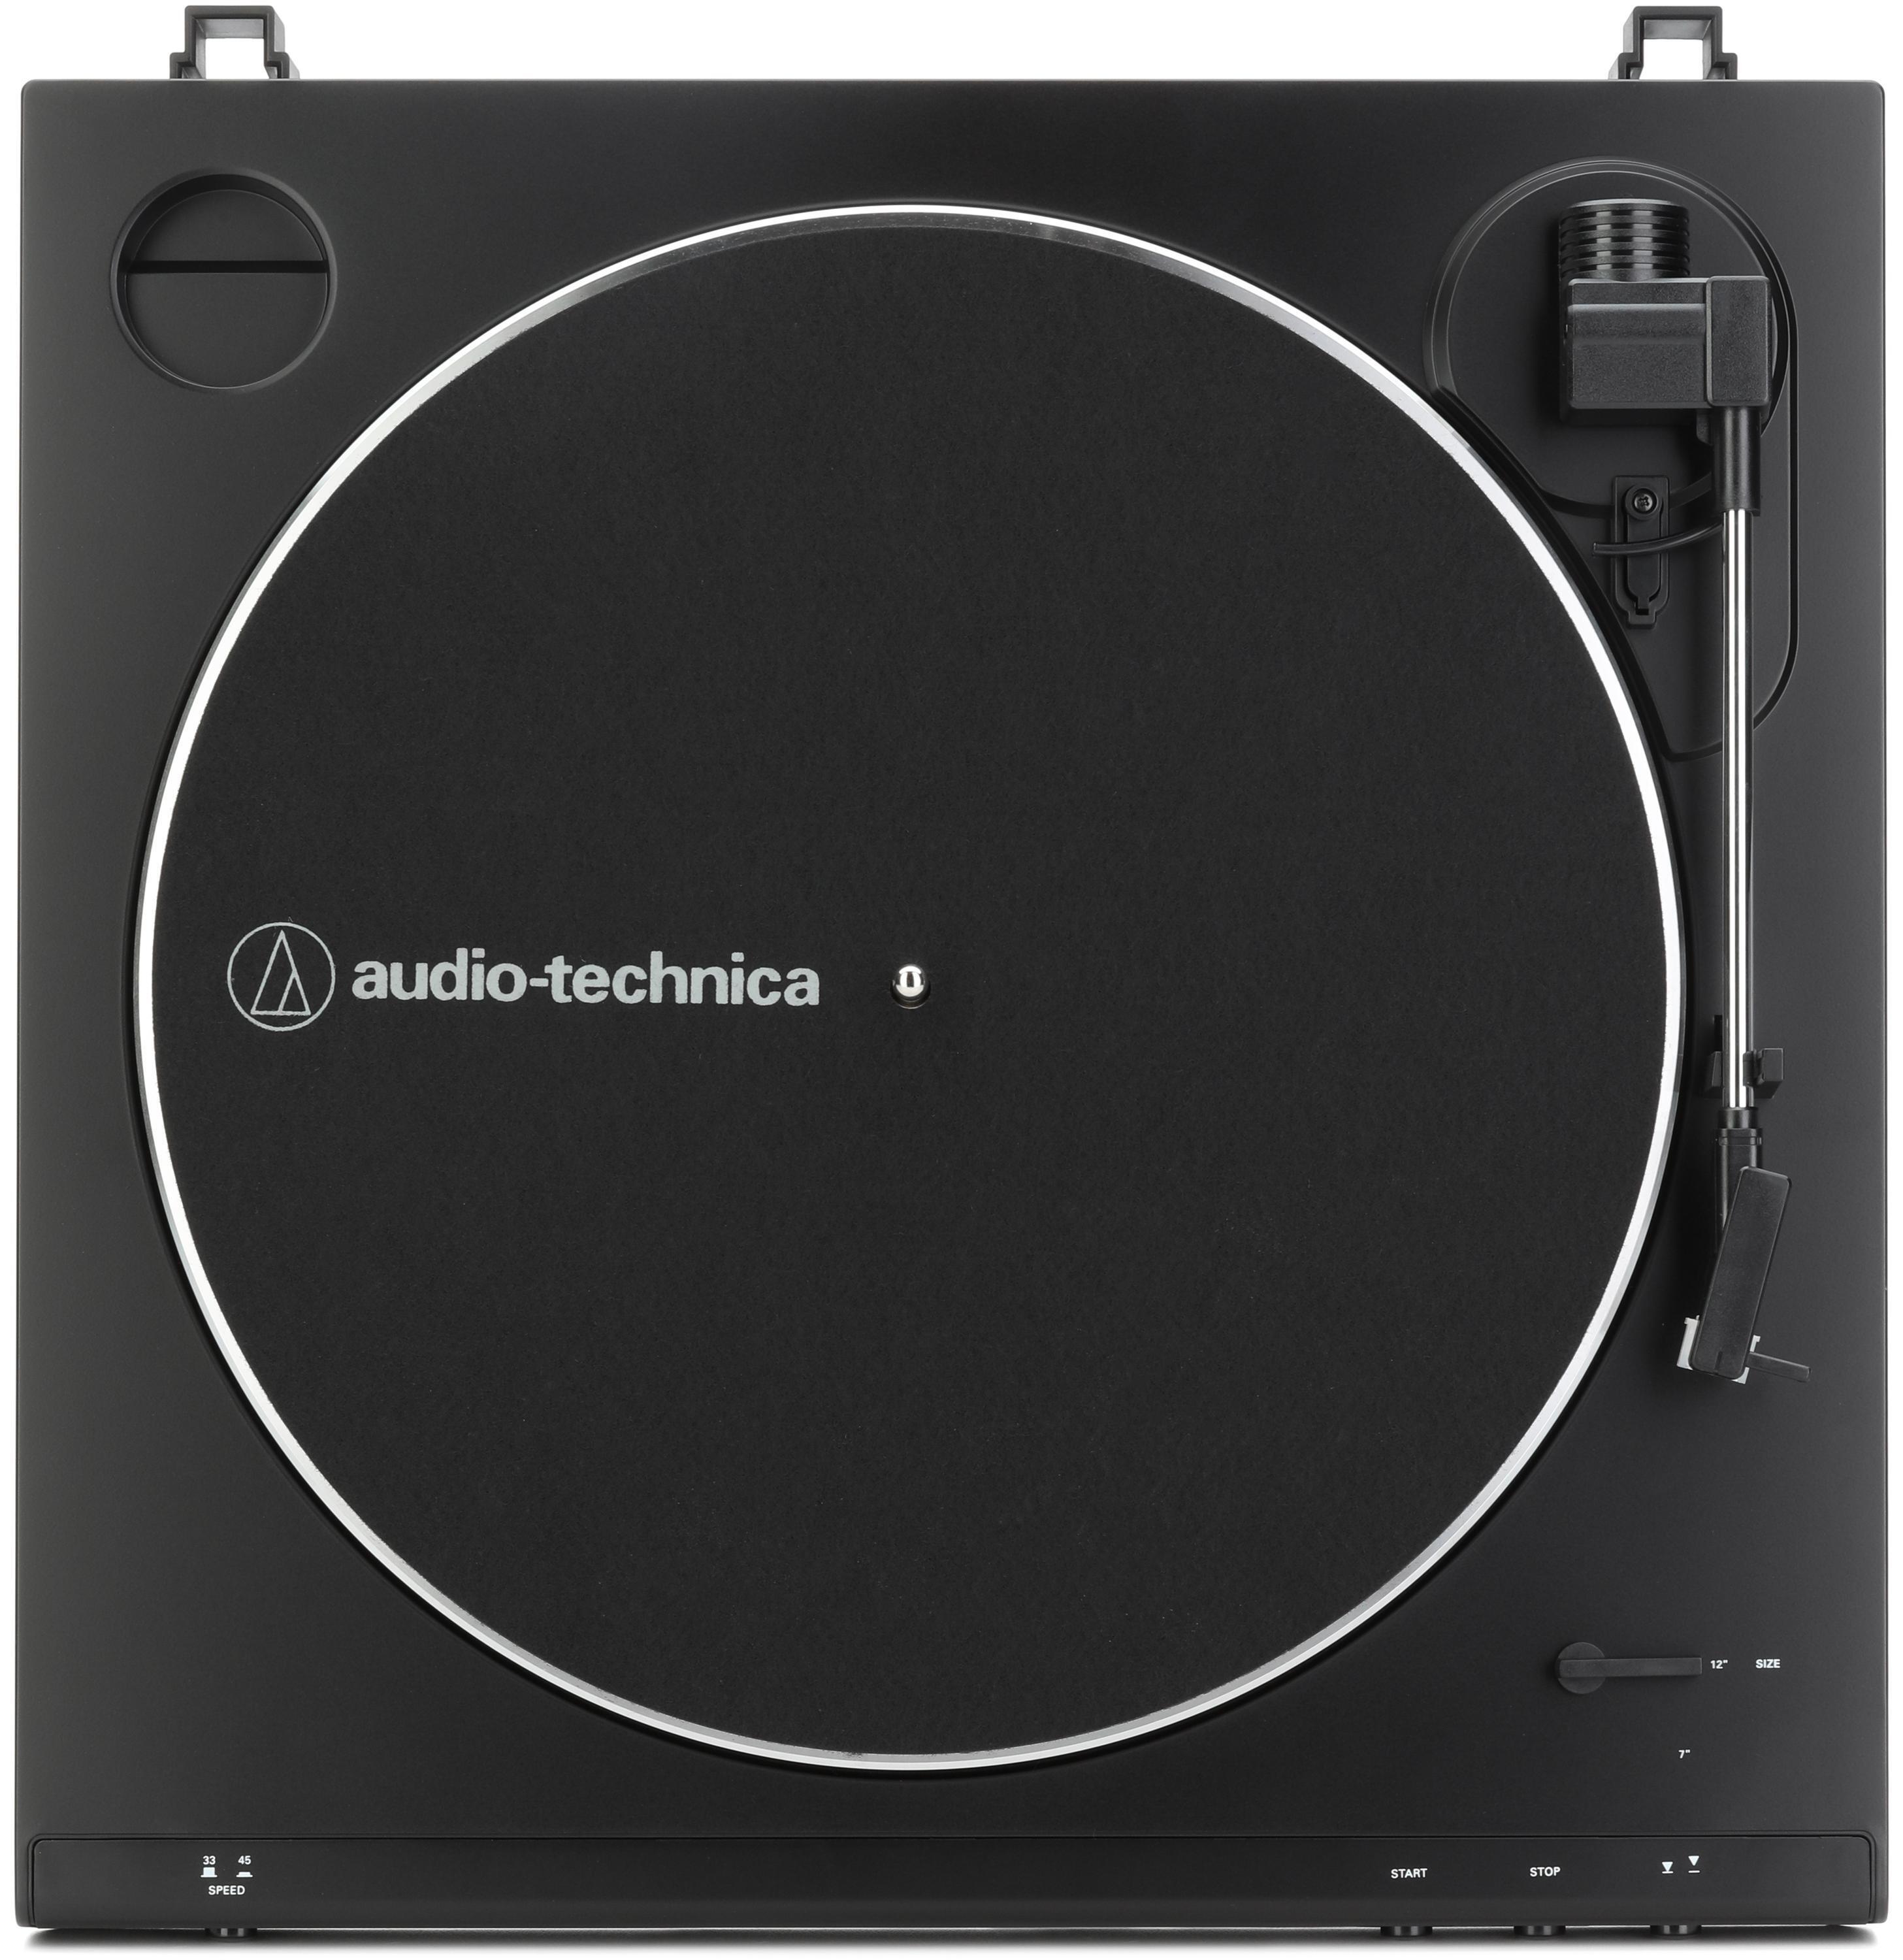 Audio-Technica AT-LP60X Automatic Belt-Drive Turntable - Black